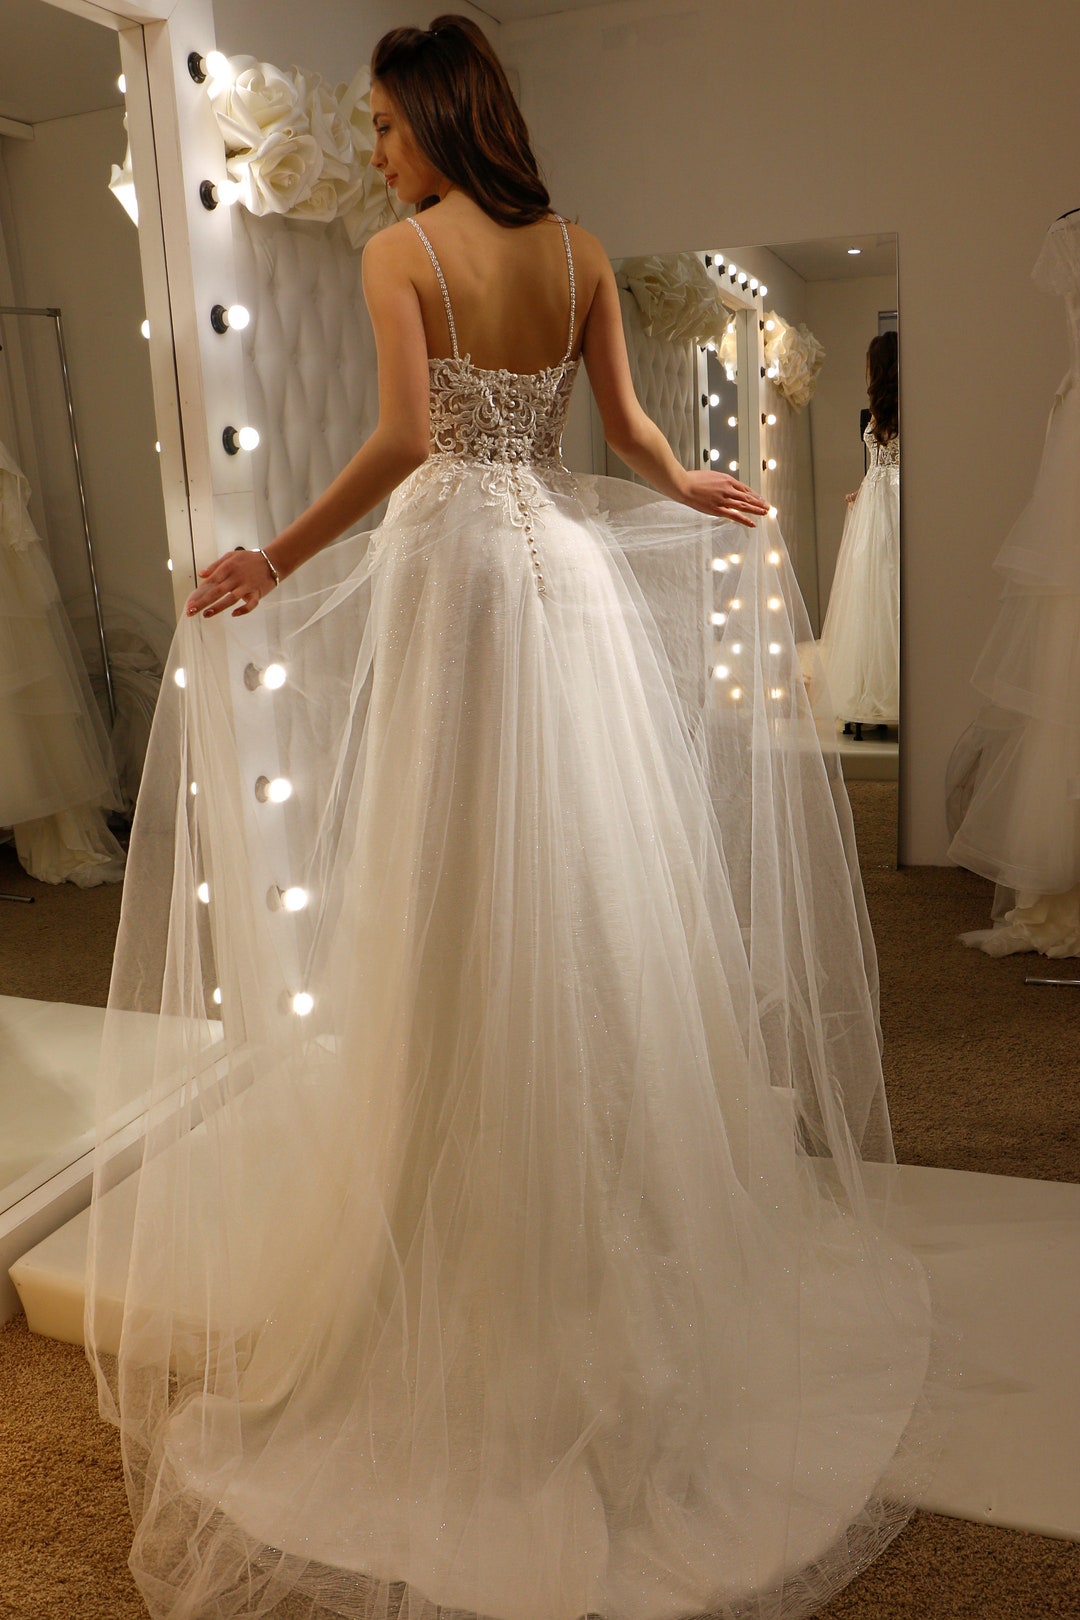 Deep Plunge Wedding Dress, Lace Corset Wedding Dress, Vivian Wedding Dress,  Fairy Wedding Gown, Backless Wedding Dress, Bridle Gown 